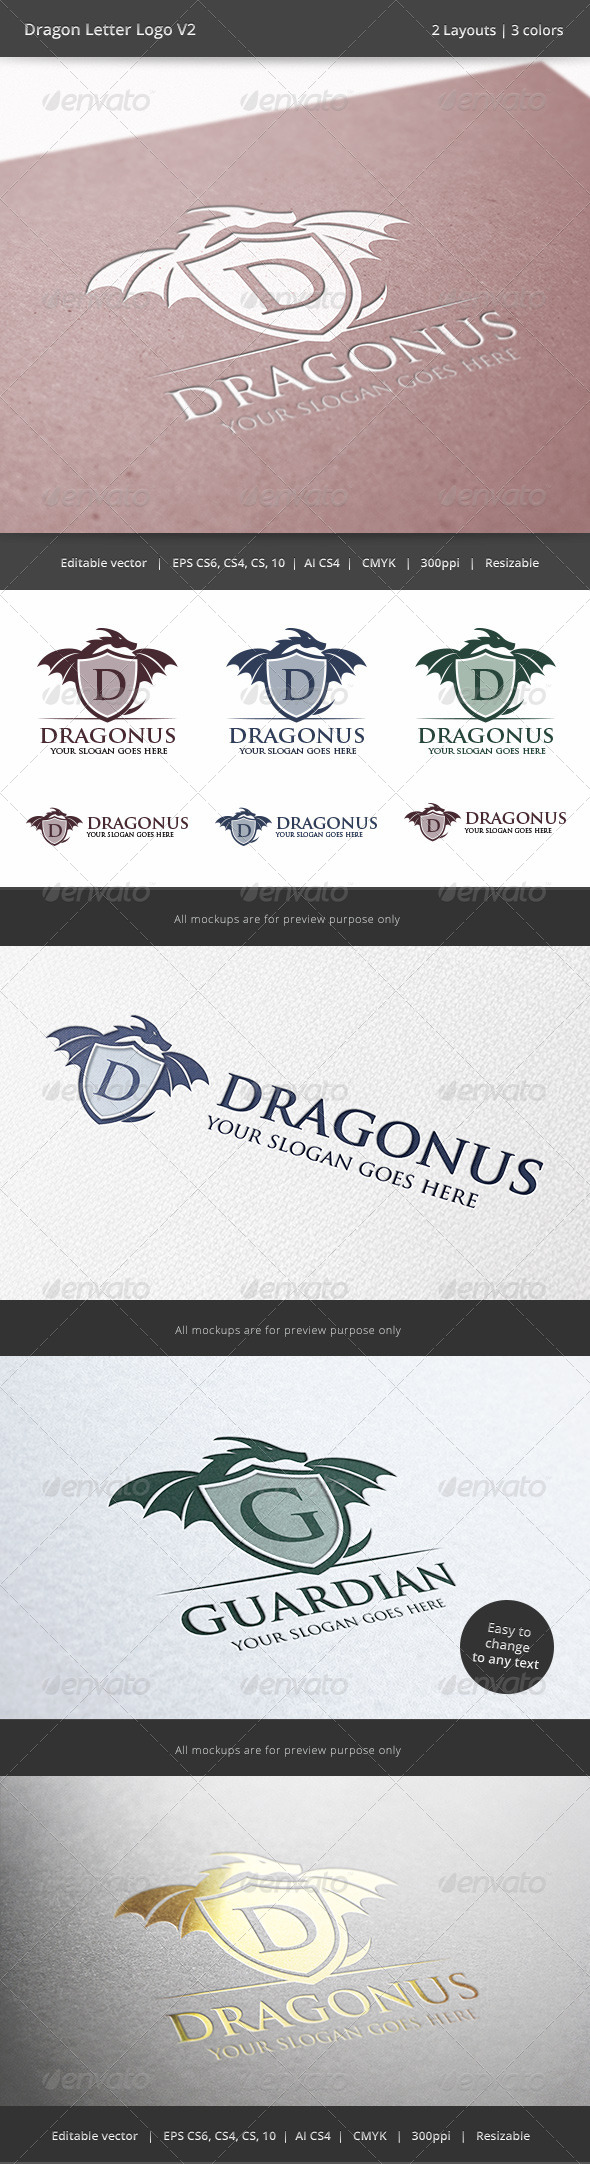 Dragon Letter V2 Logo